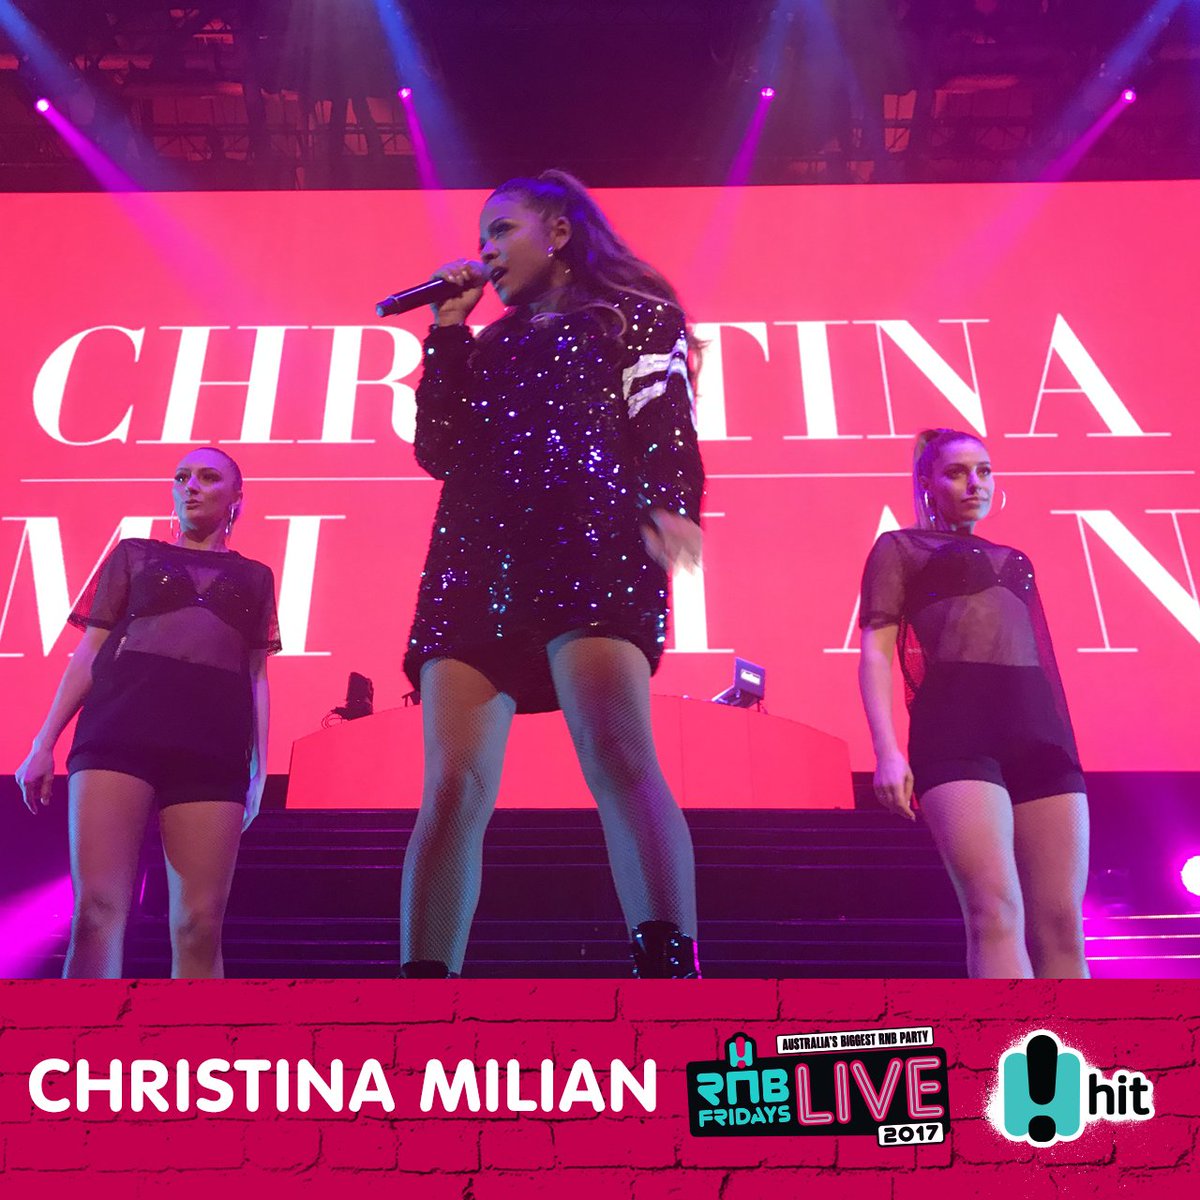 RT @HitNetworkAUS: Our gal @ChristinaMilian strutting her stuff on stage tonight #RnBFridaysLive https://t.co/IHi9xQ5ZVx